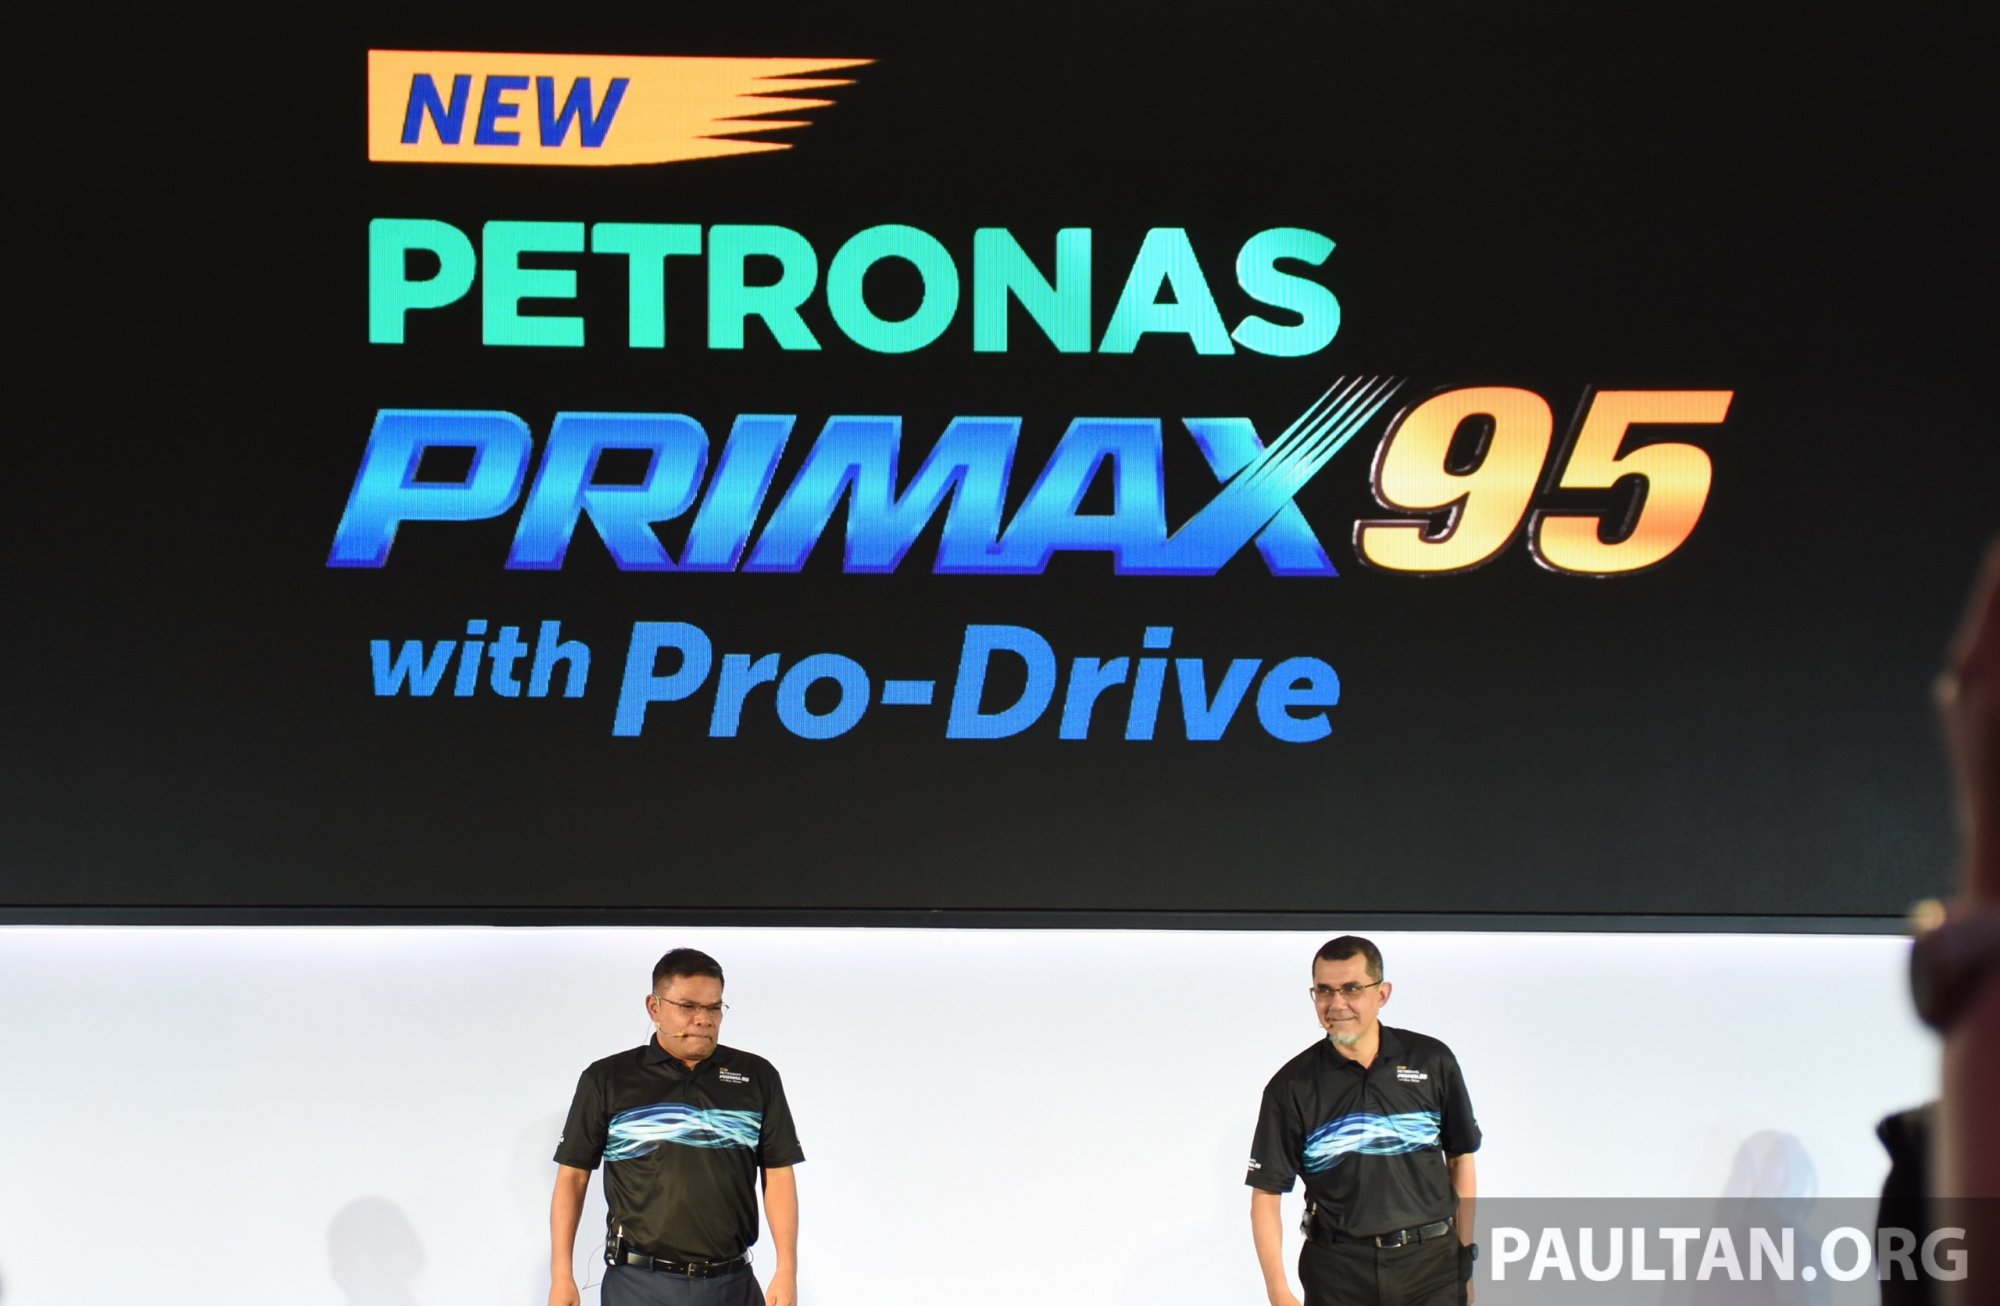 Petronas-Primax-95-Pro-Drive-launch-4.jpg